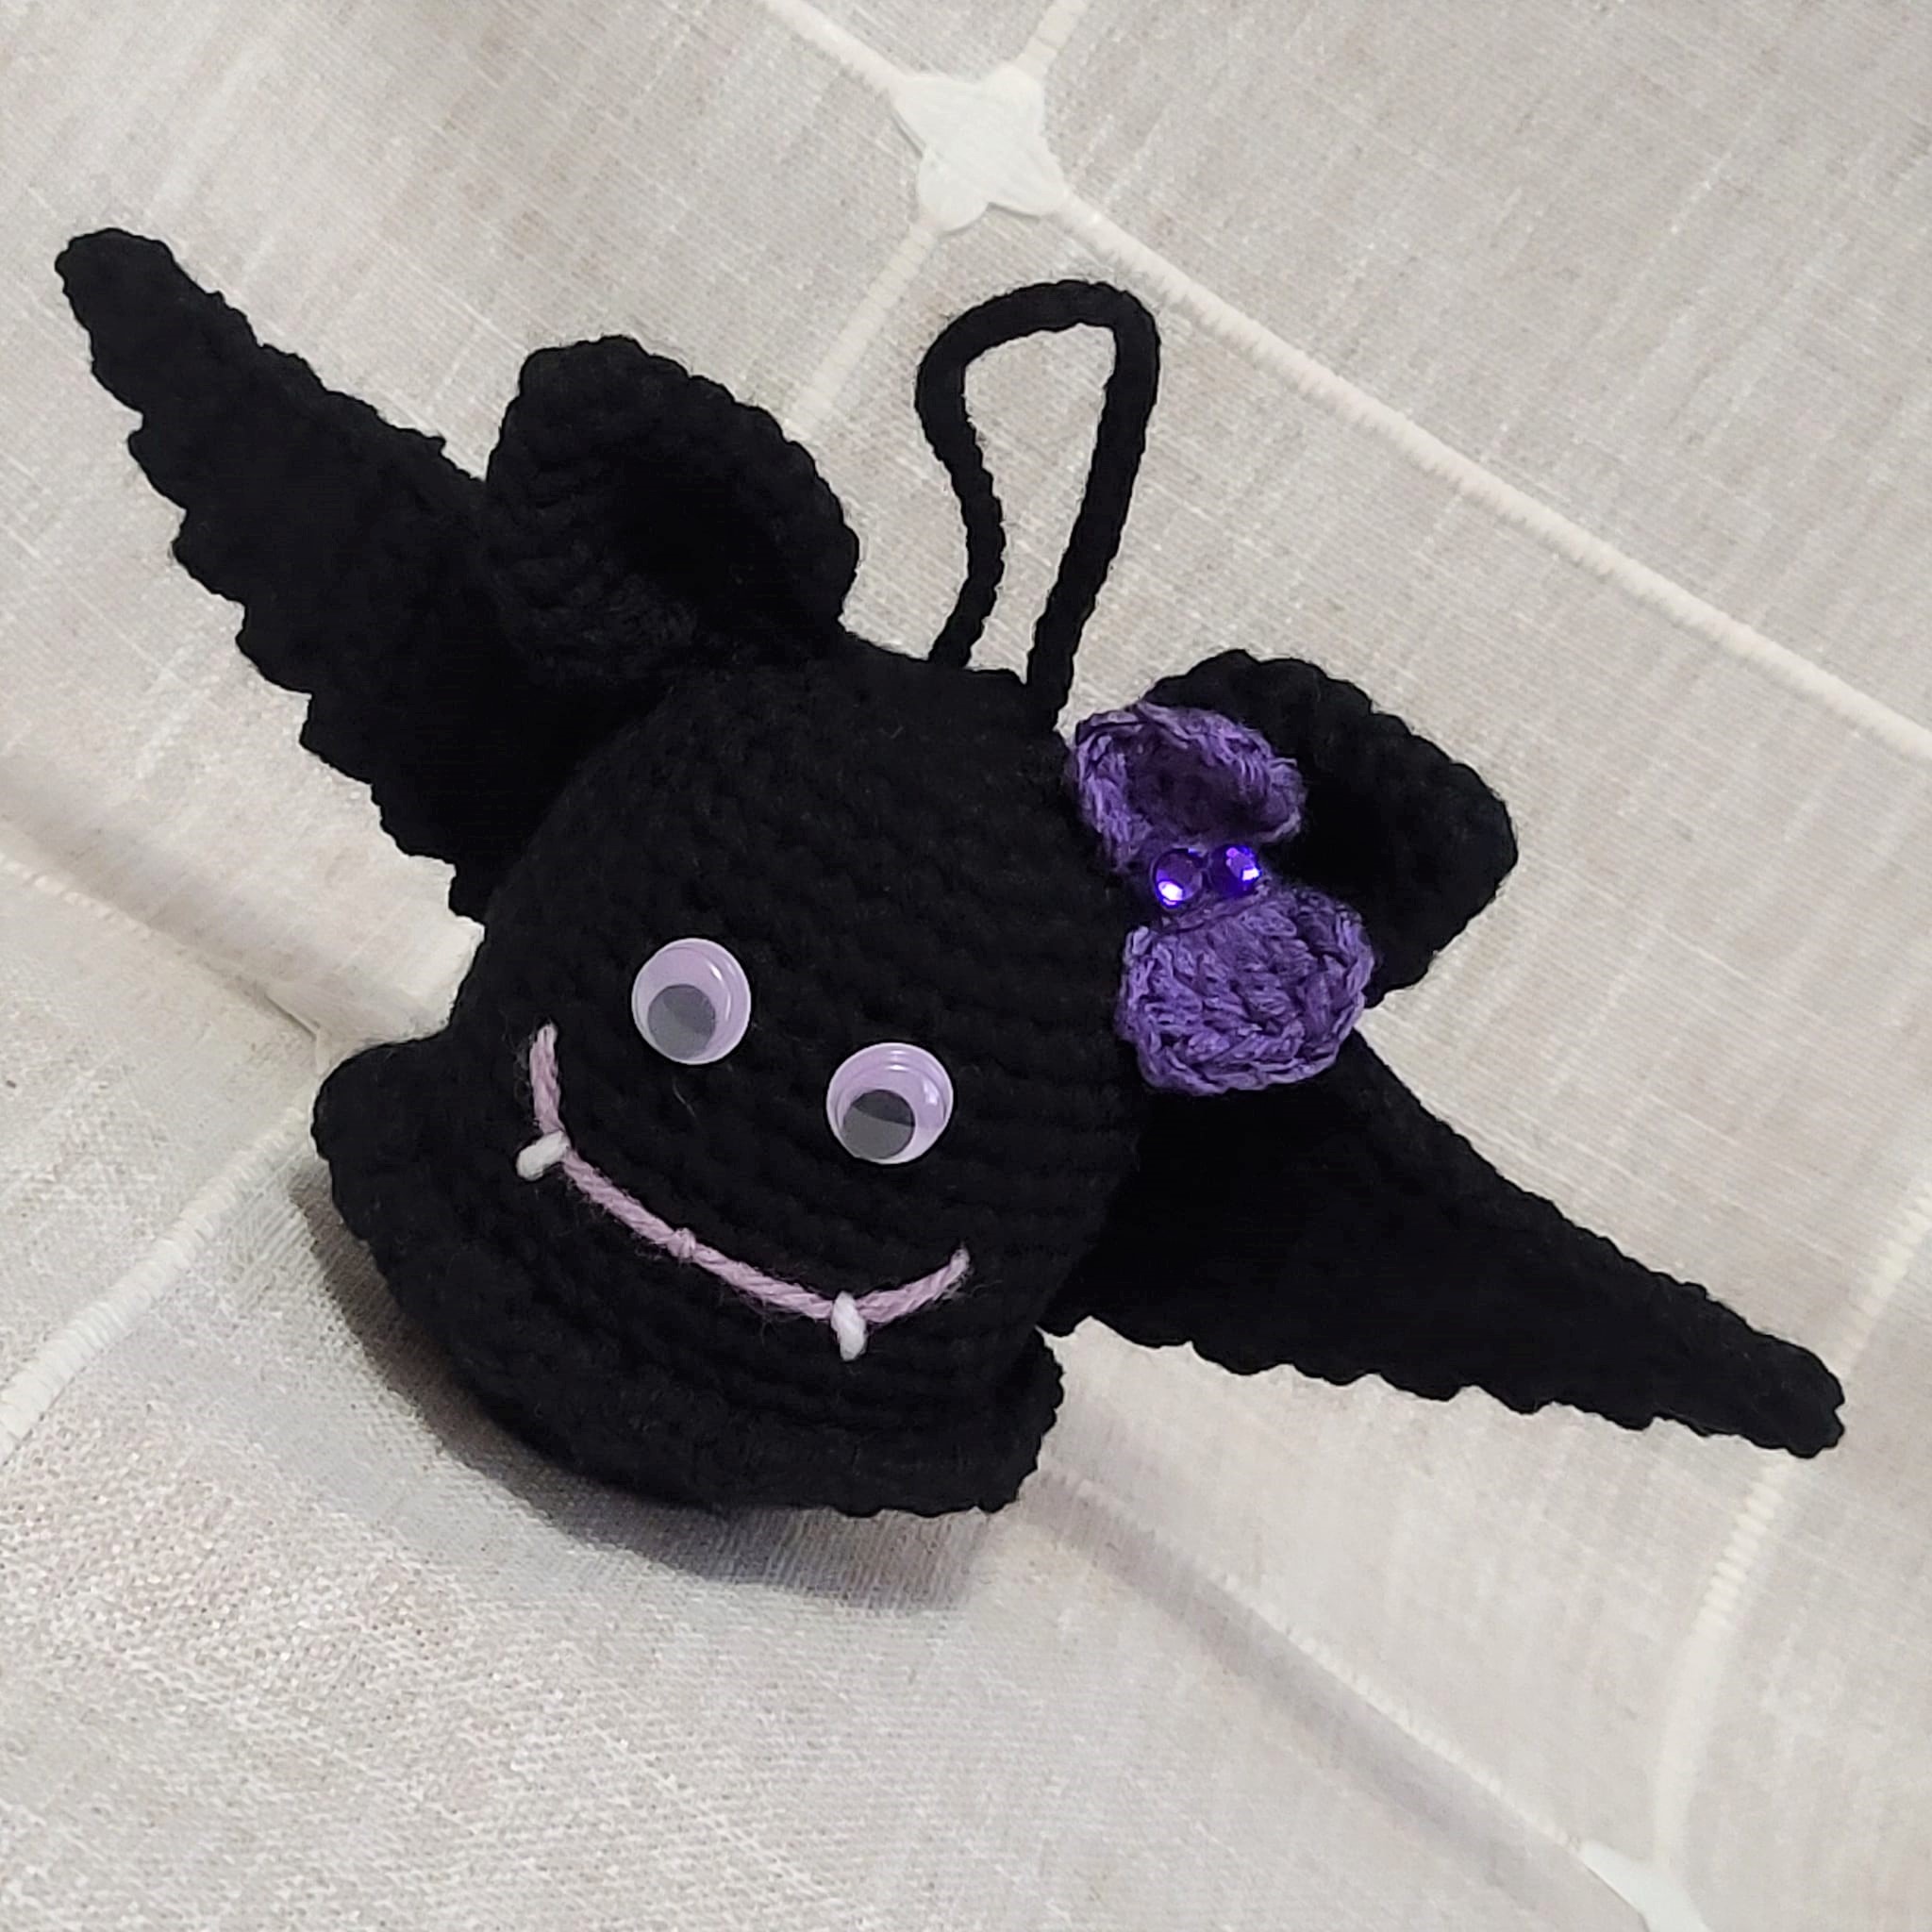 Crochet amigurumi handmade halloween bat - black